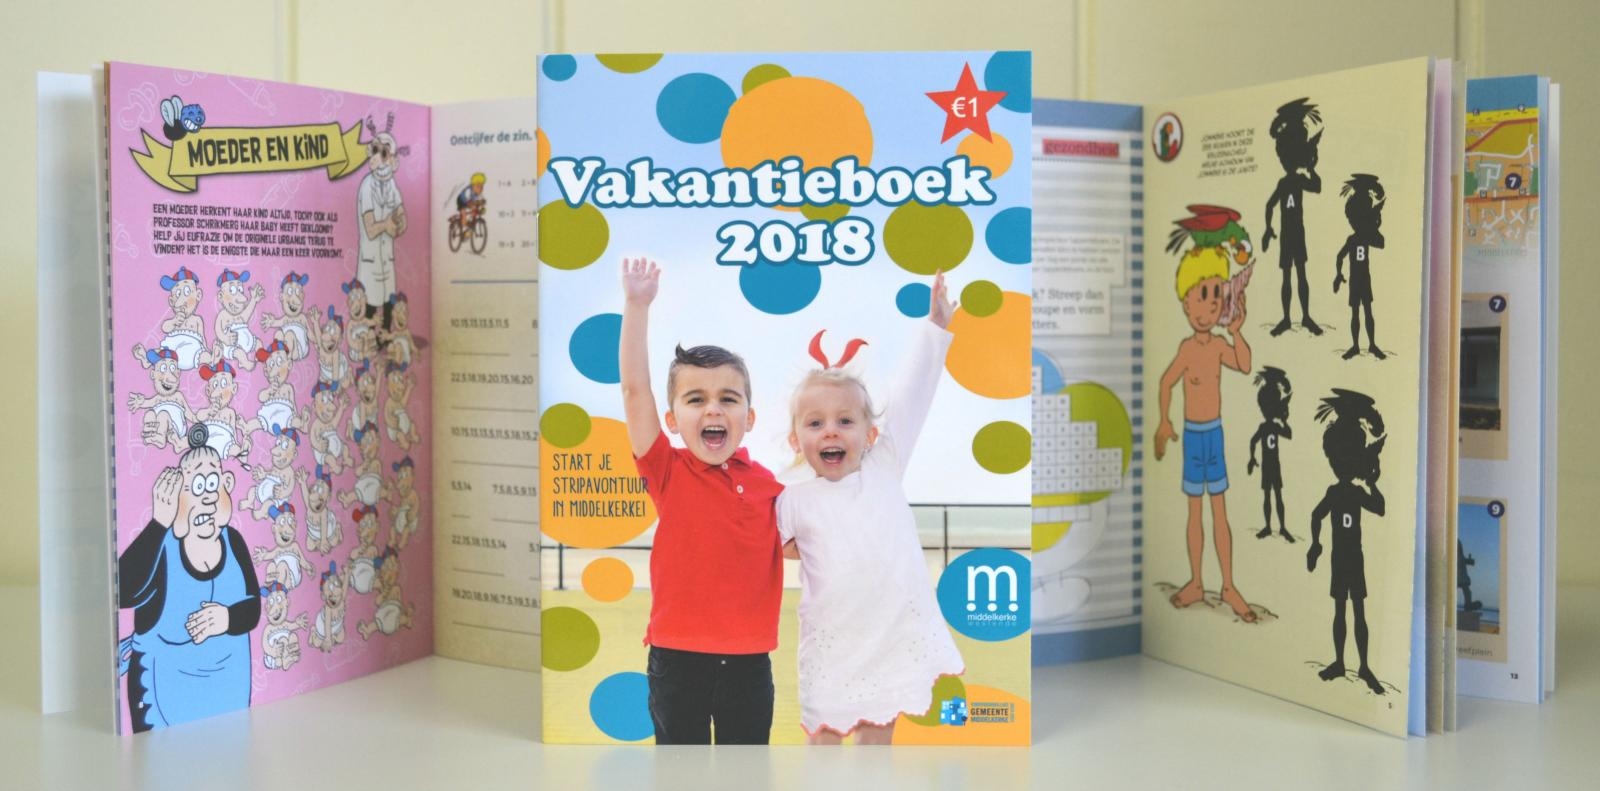 Vakantieboekje 2018, middelkerke.